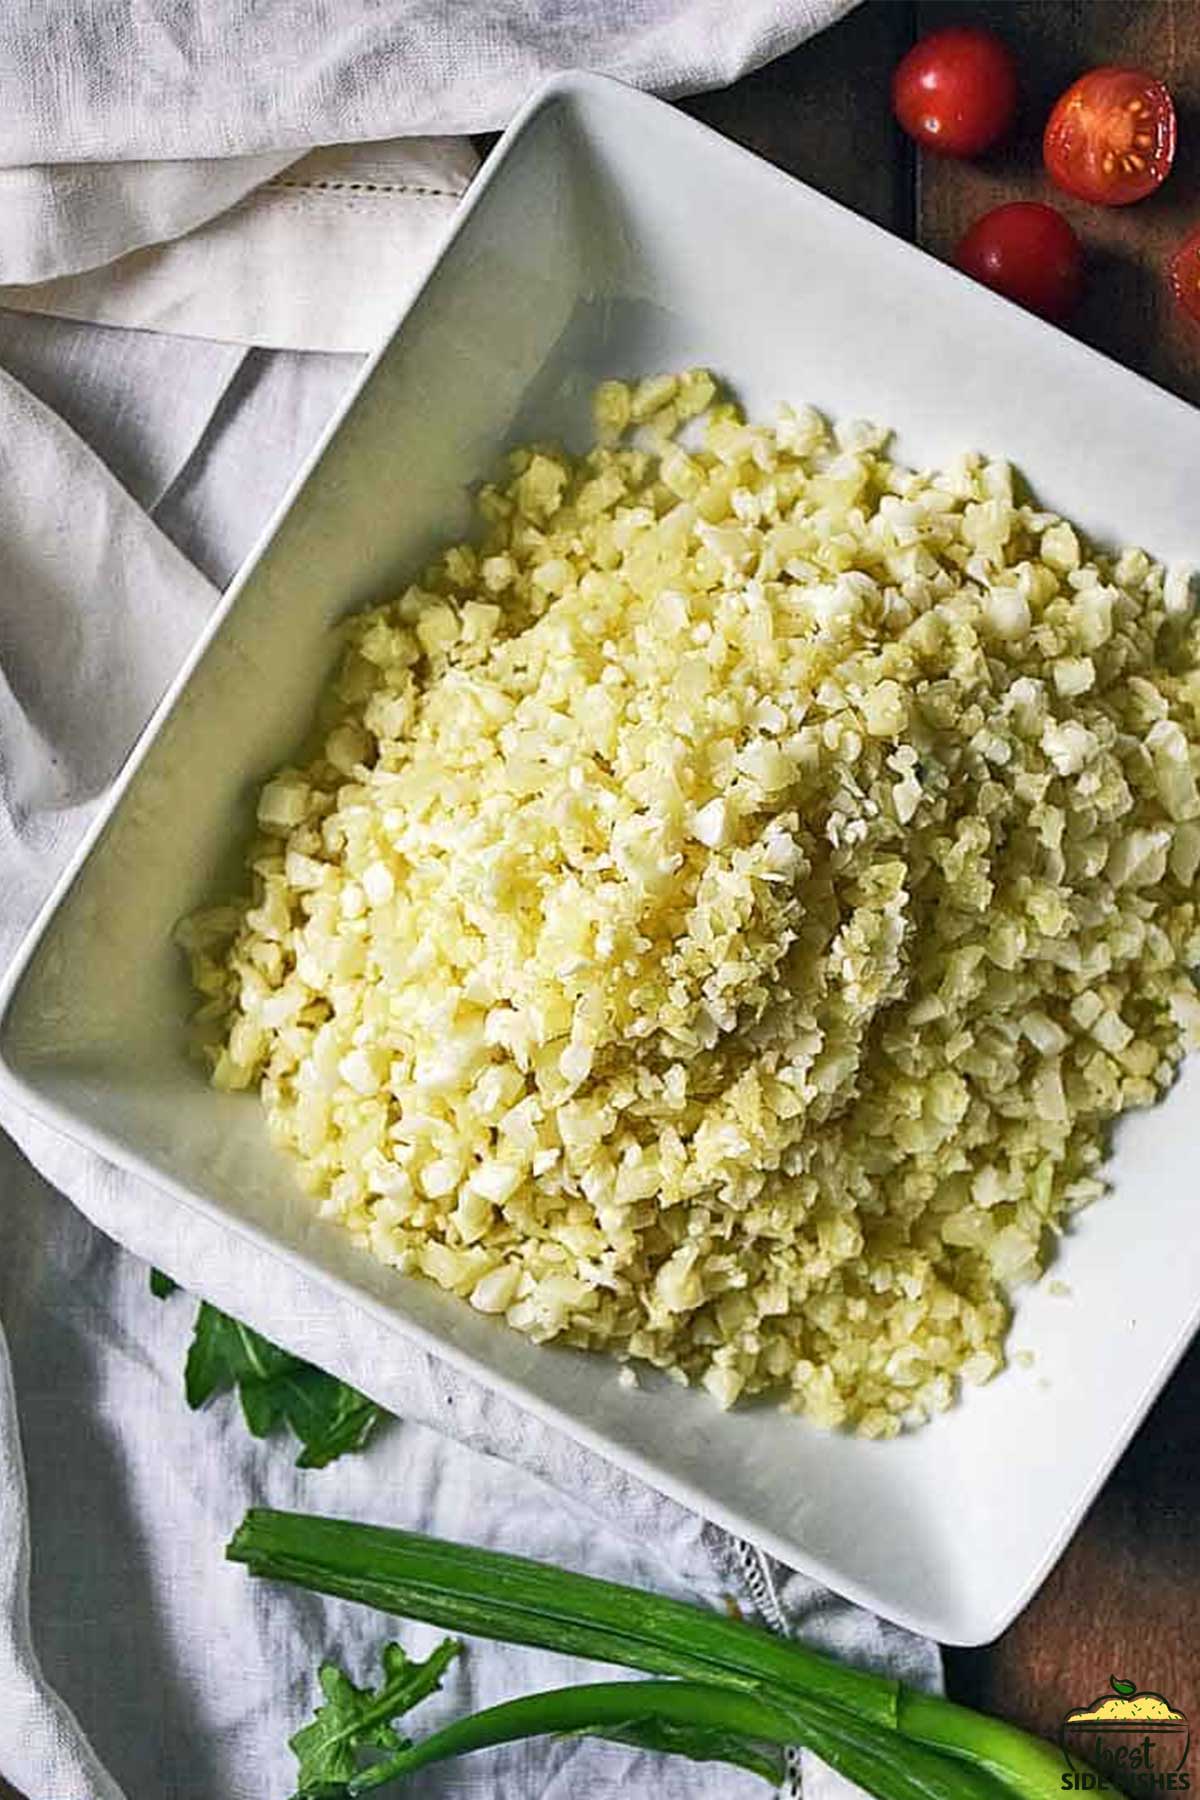 cauliflower rice in a white bowl